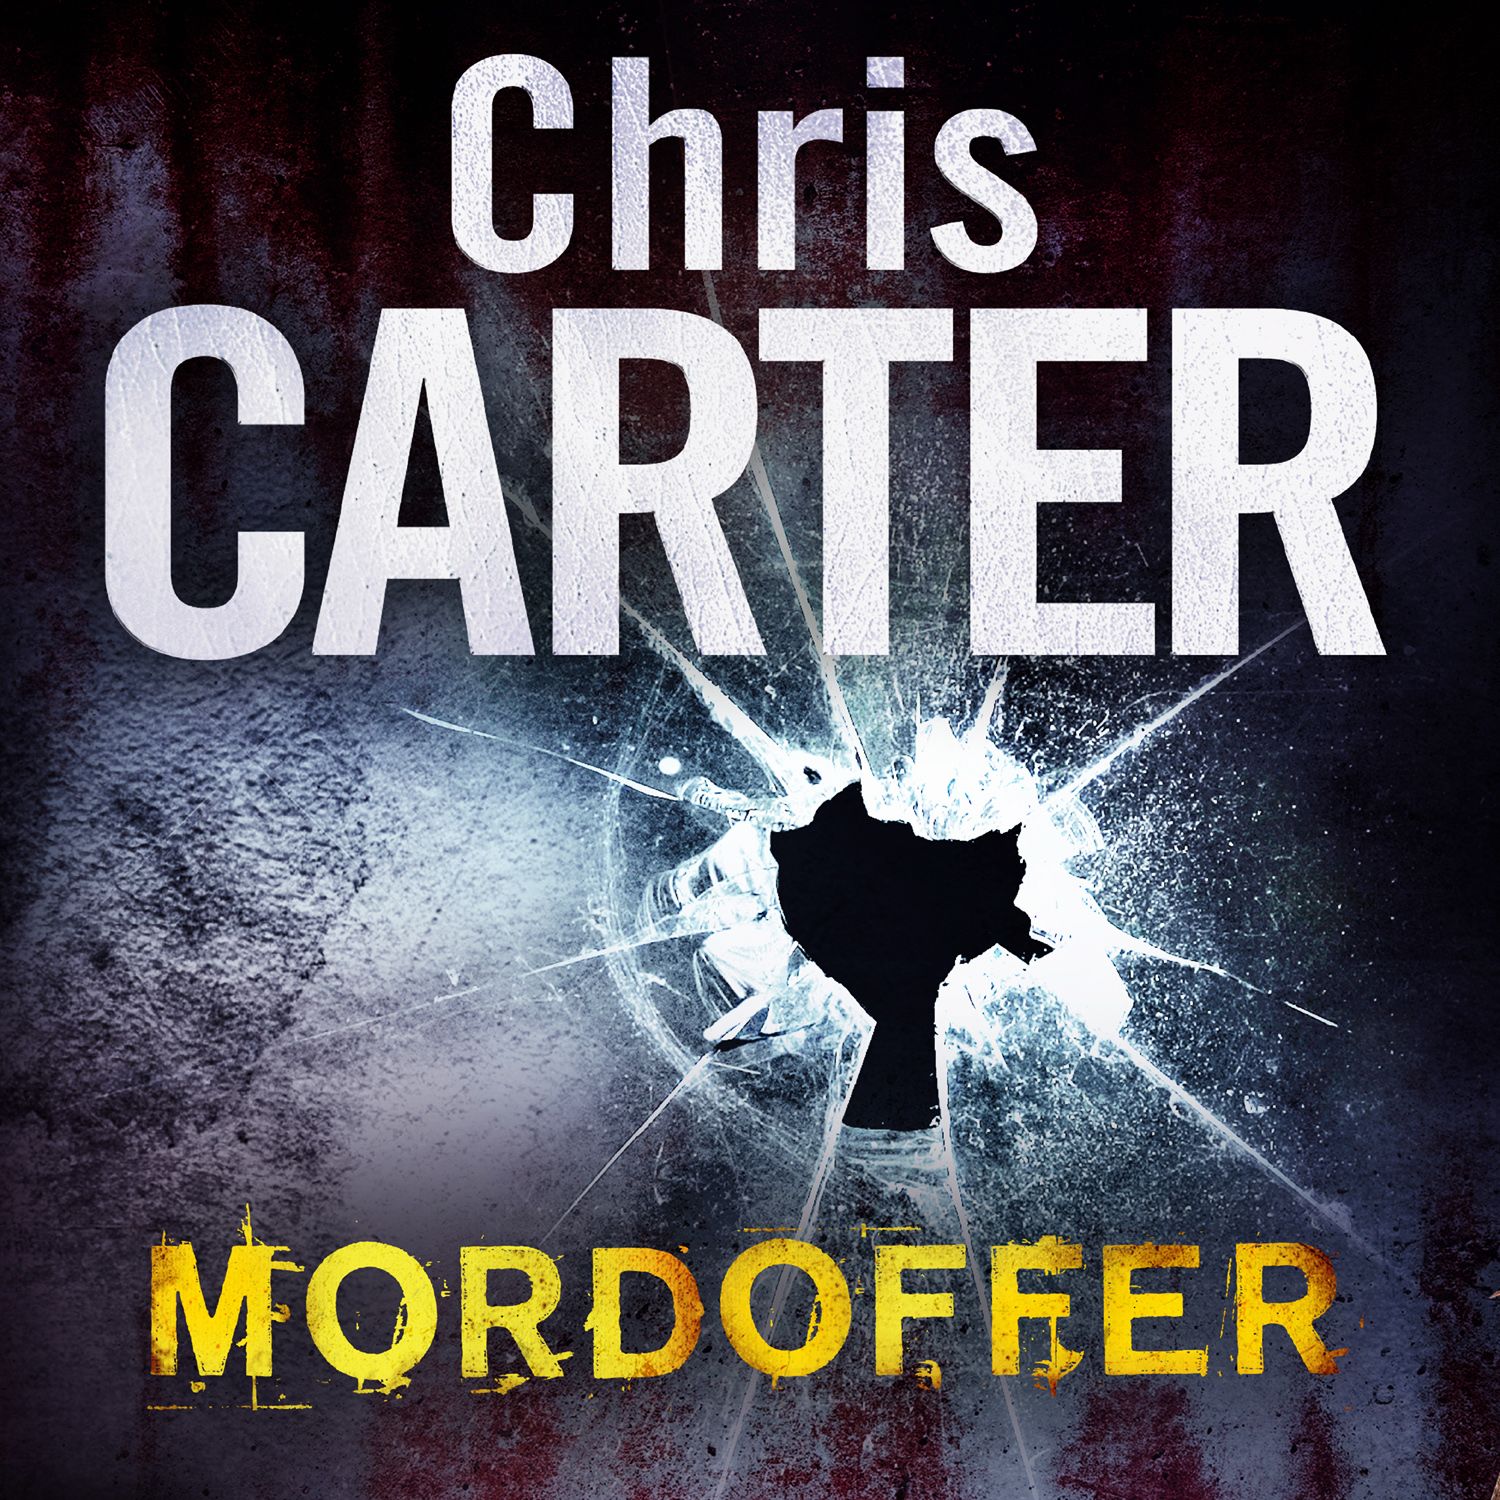 Mordoffer, audiobook by Chris Carter